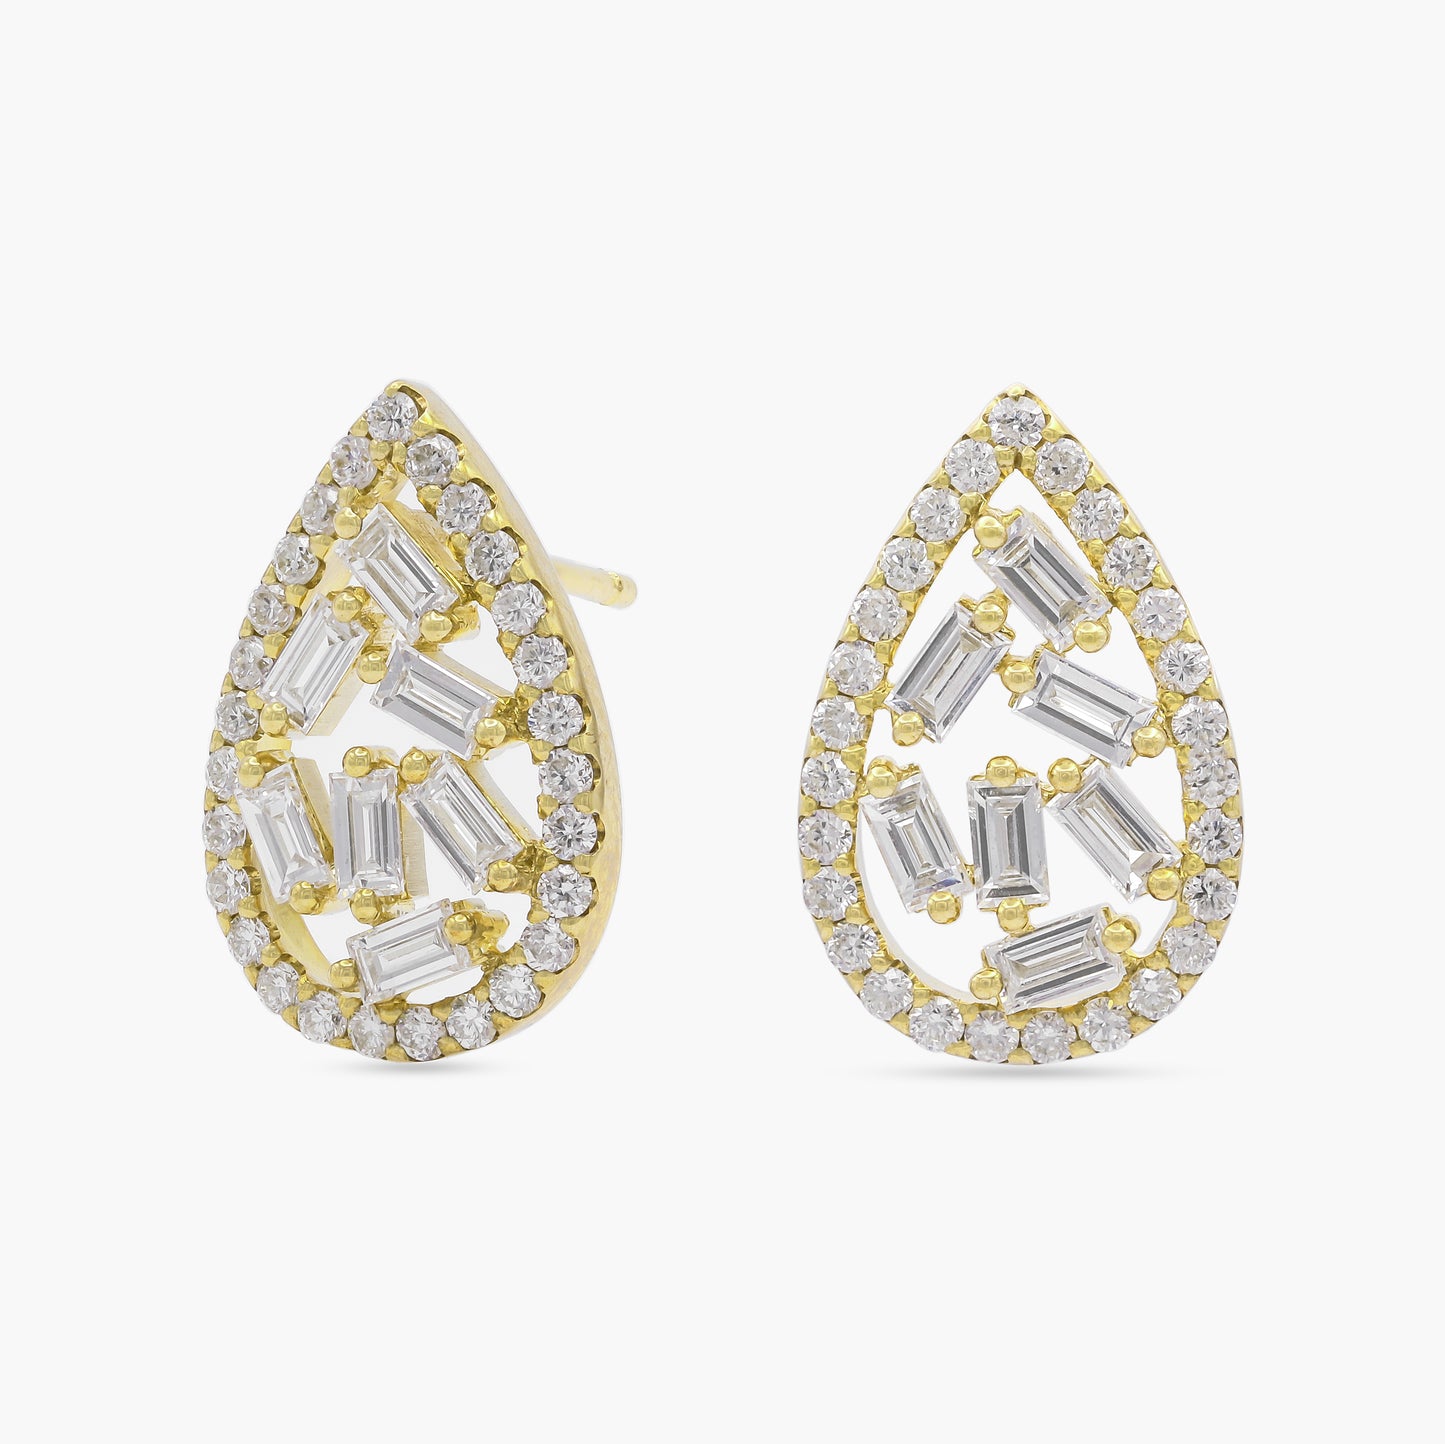 9ct Yellow Gold Pear Shaped Diamond Stud Earrings